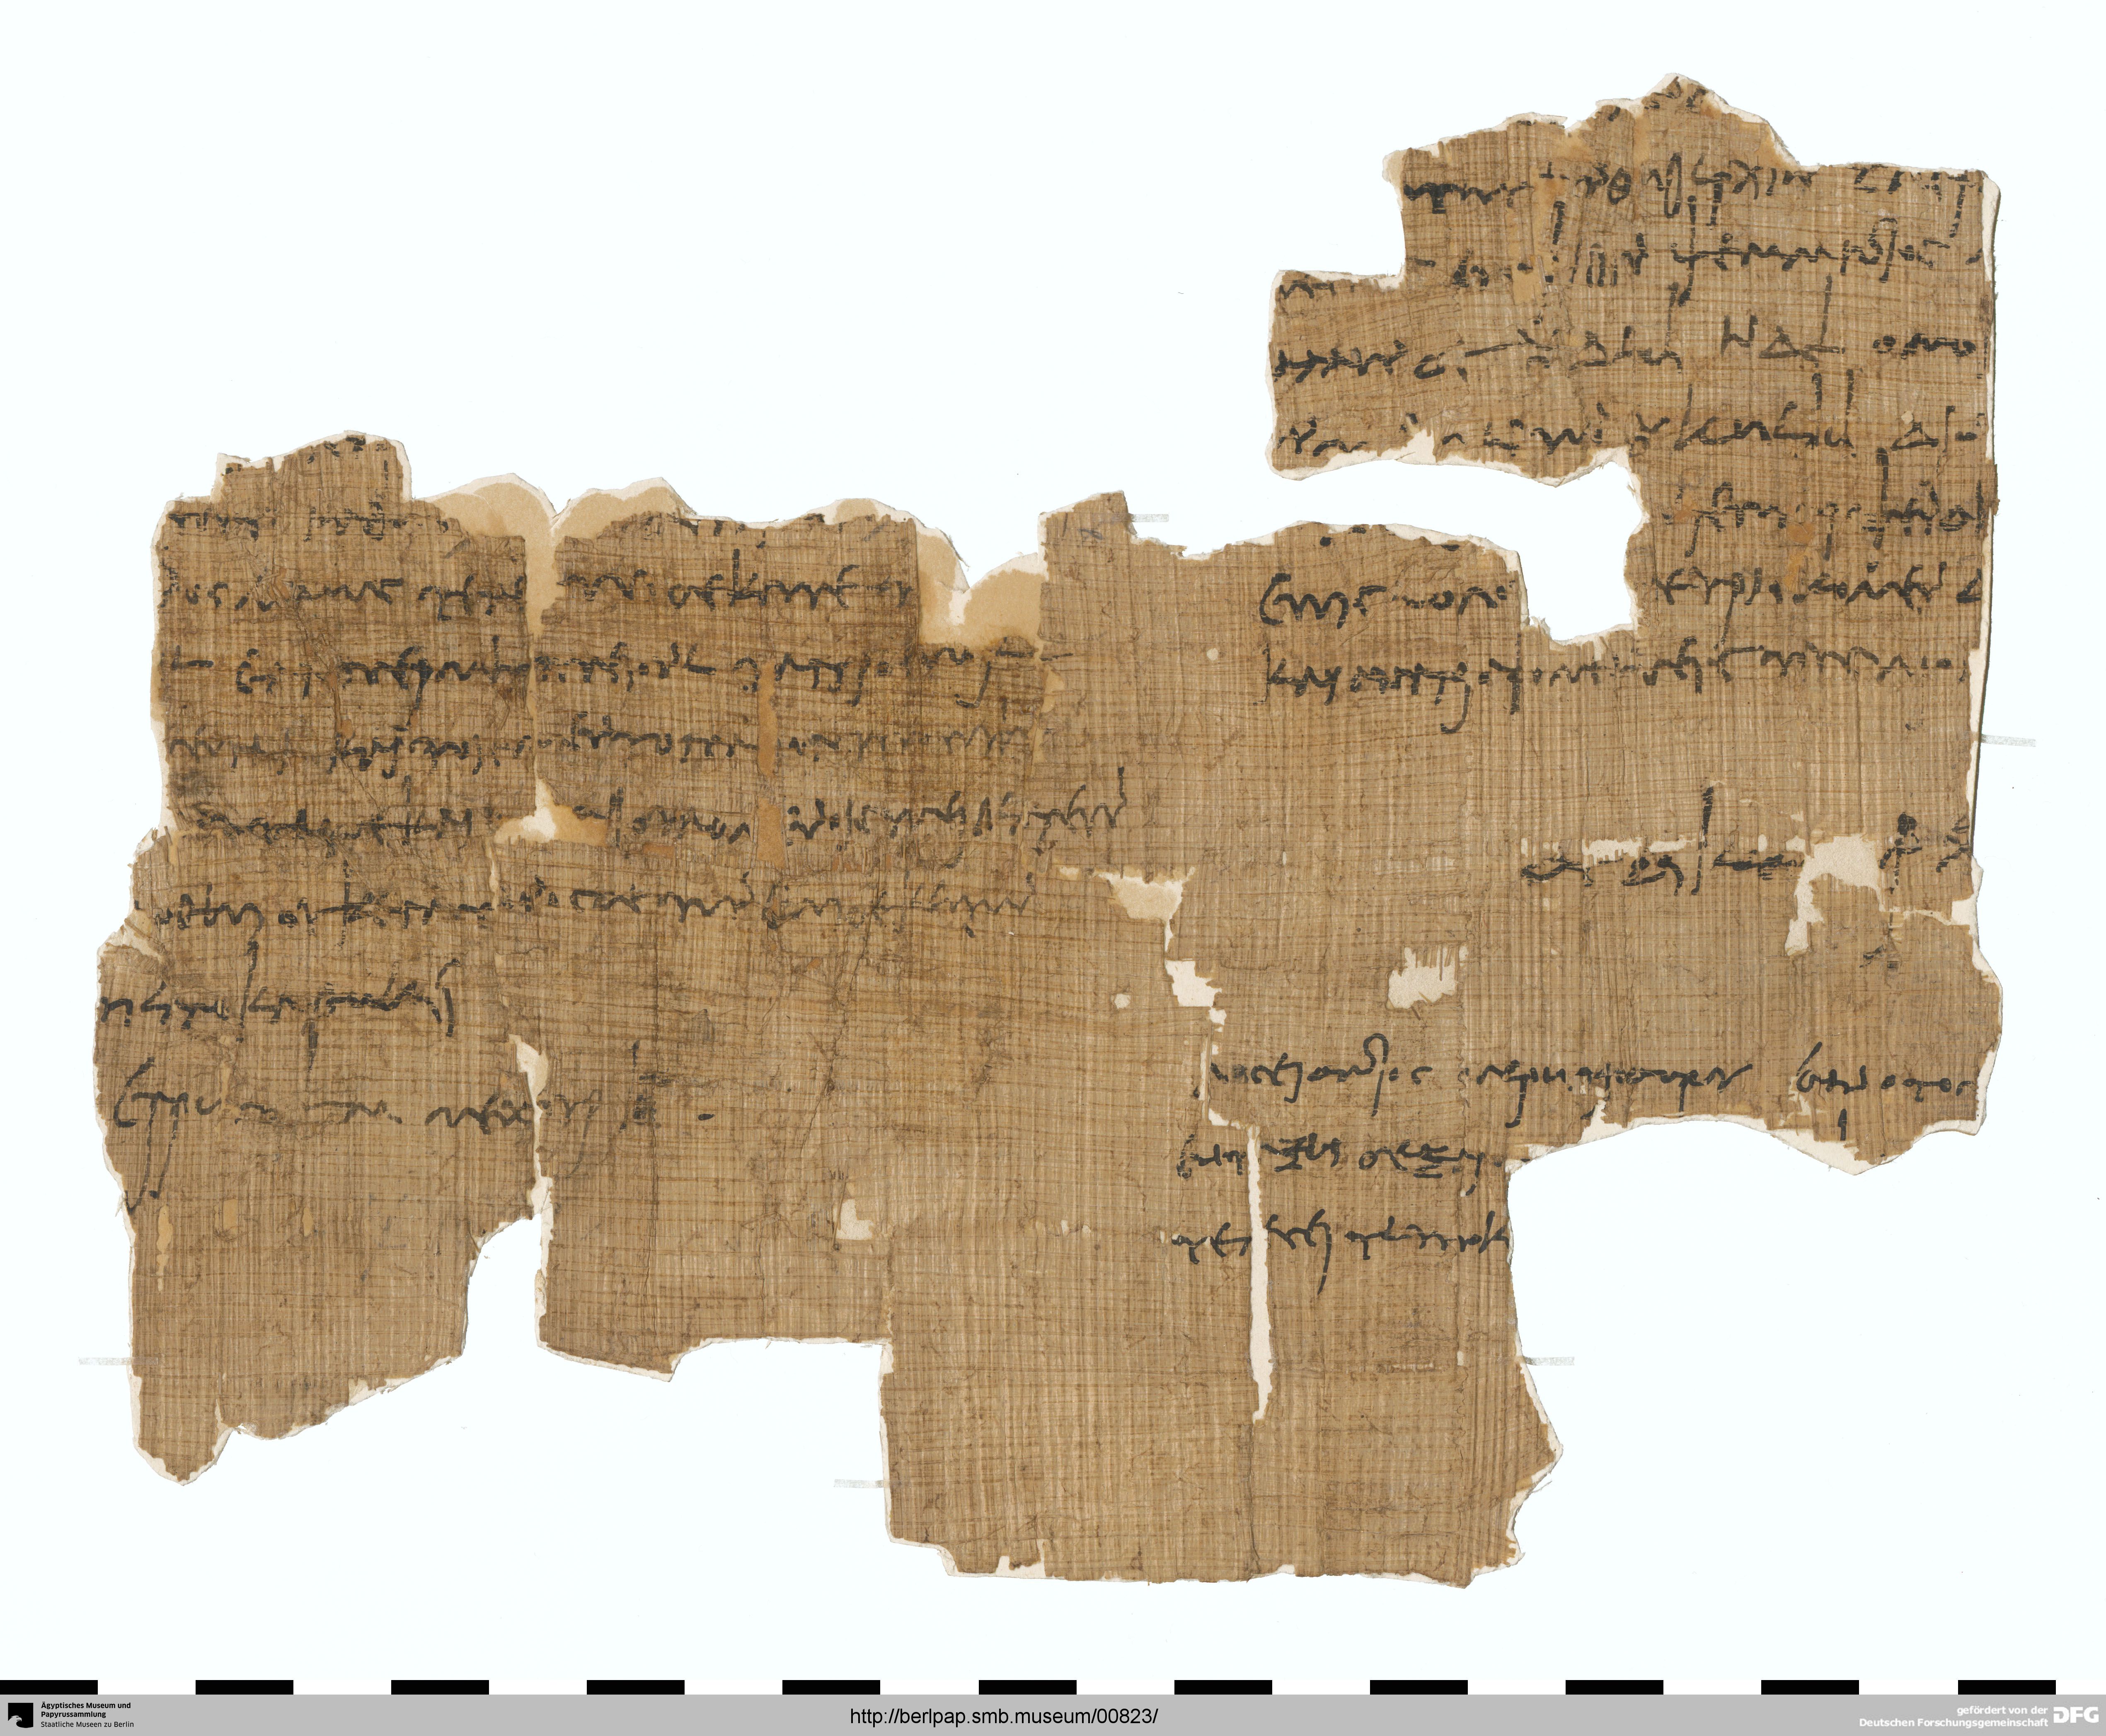 https://berlpap.smb.museum/Original/P_01376_R_001.jpg (Ägyptisches Museum und Papyrussammlung, Staatliche Museen zu Berlin CC BY-NC-SA)